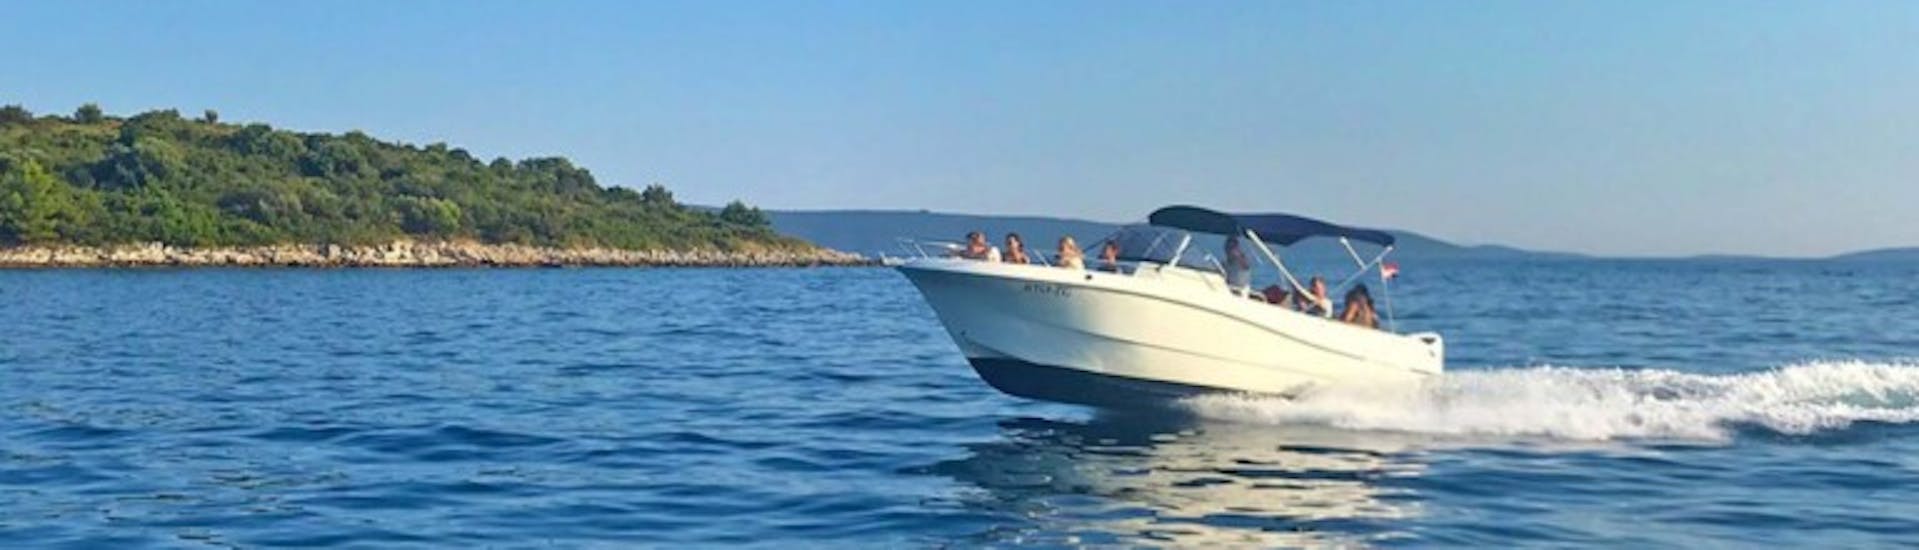 Private Bootstour zur Blauen Lagune ab Trogir.